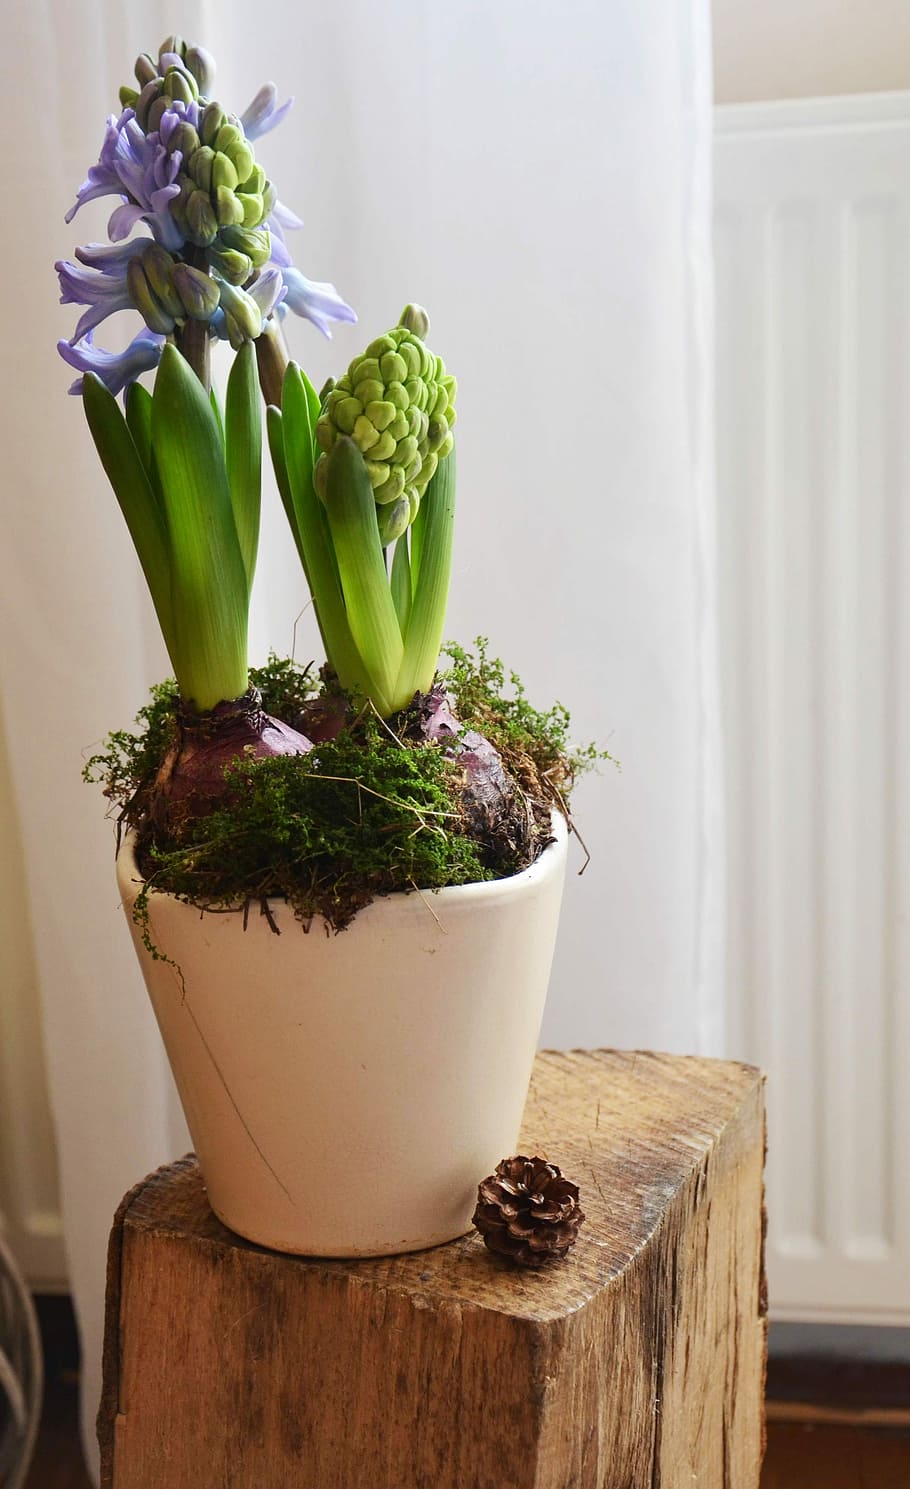 Hyacinth, Flower, Spring, hyacinth, flower, flowerpots, nature, house, violet, indoors, vase